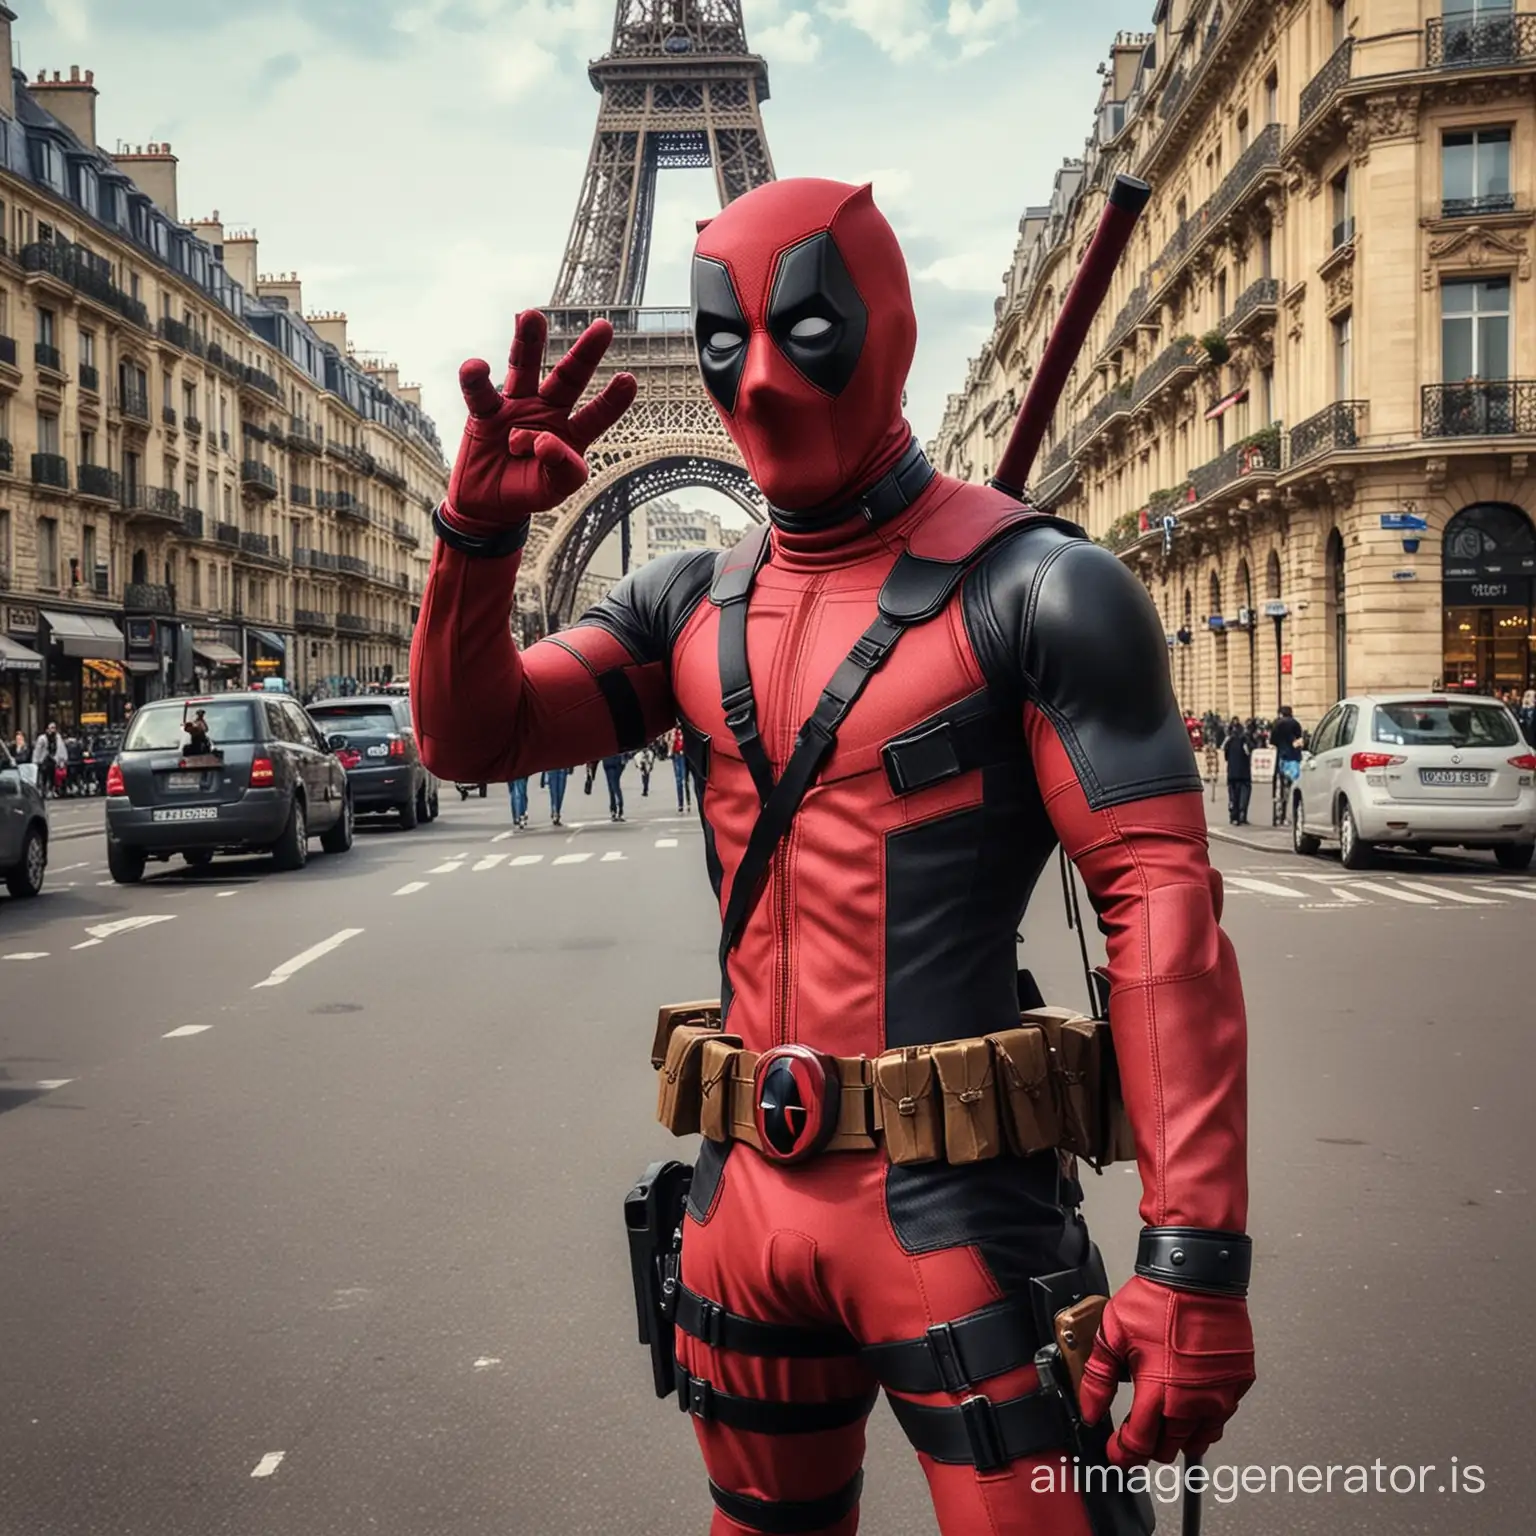 Deadpools-Parisian-Adventure-Quirky-Selfie-with-Iconic-Landmarks